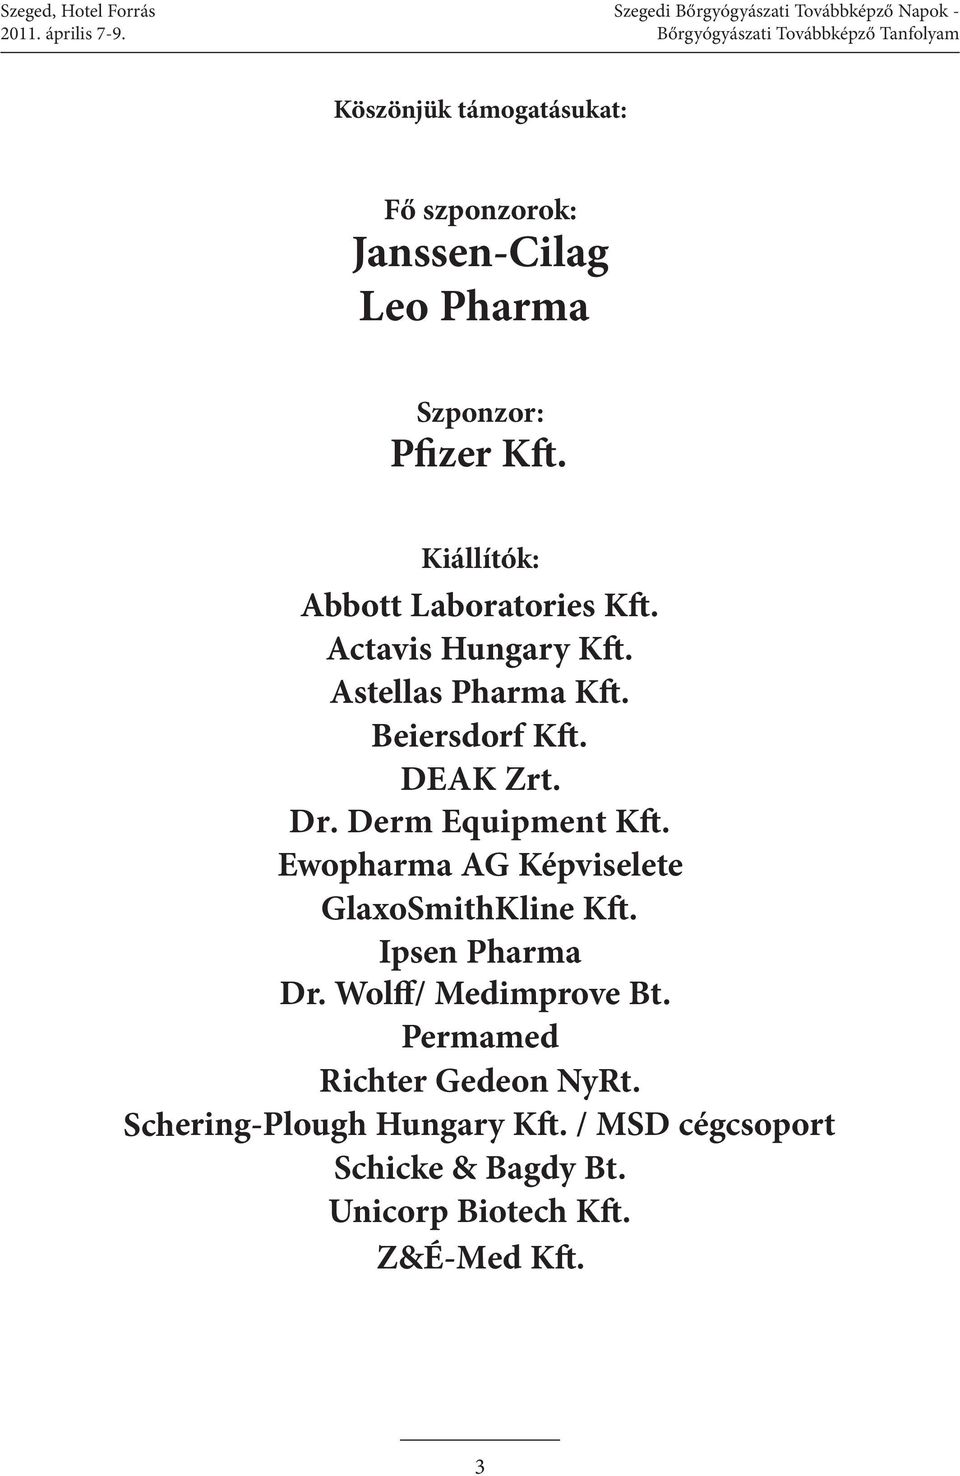 Kiállítók: Abbott Laboratories Kft. Actavis Hungary Kft. Astellas Pharma Kft. Beiersdorf Kft. DEAK Zrt. Dr. Derm Equipment Kft.